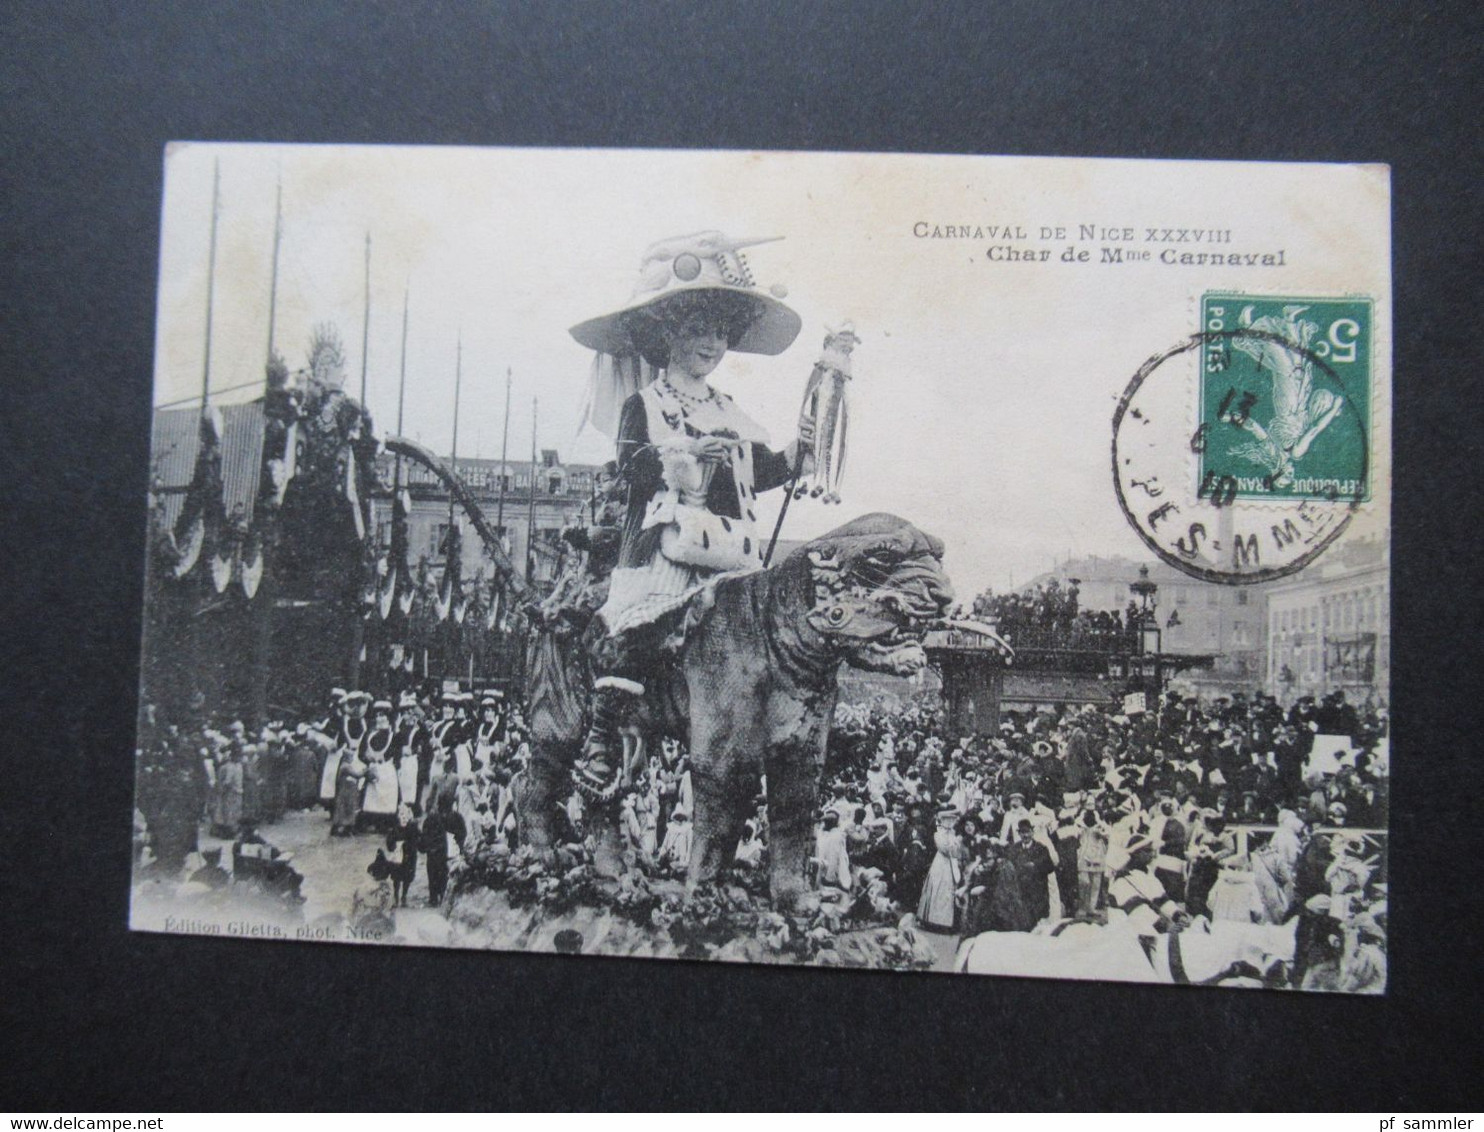 Frankreich 1910 AK Bildseitig Frankiert Fasching / Karneval Carnaval De Nice XXXVIII Char De Mme Carnaval - Karneval - Fasching